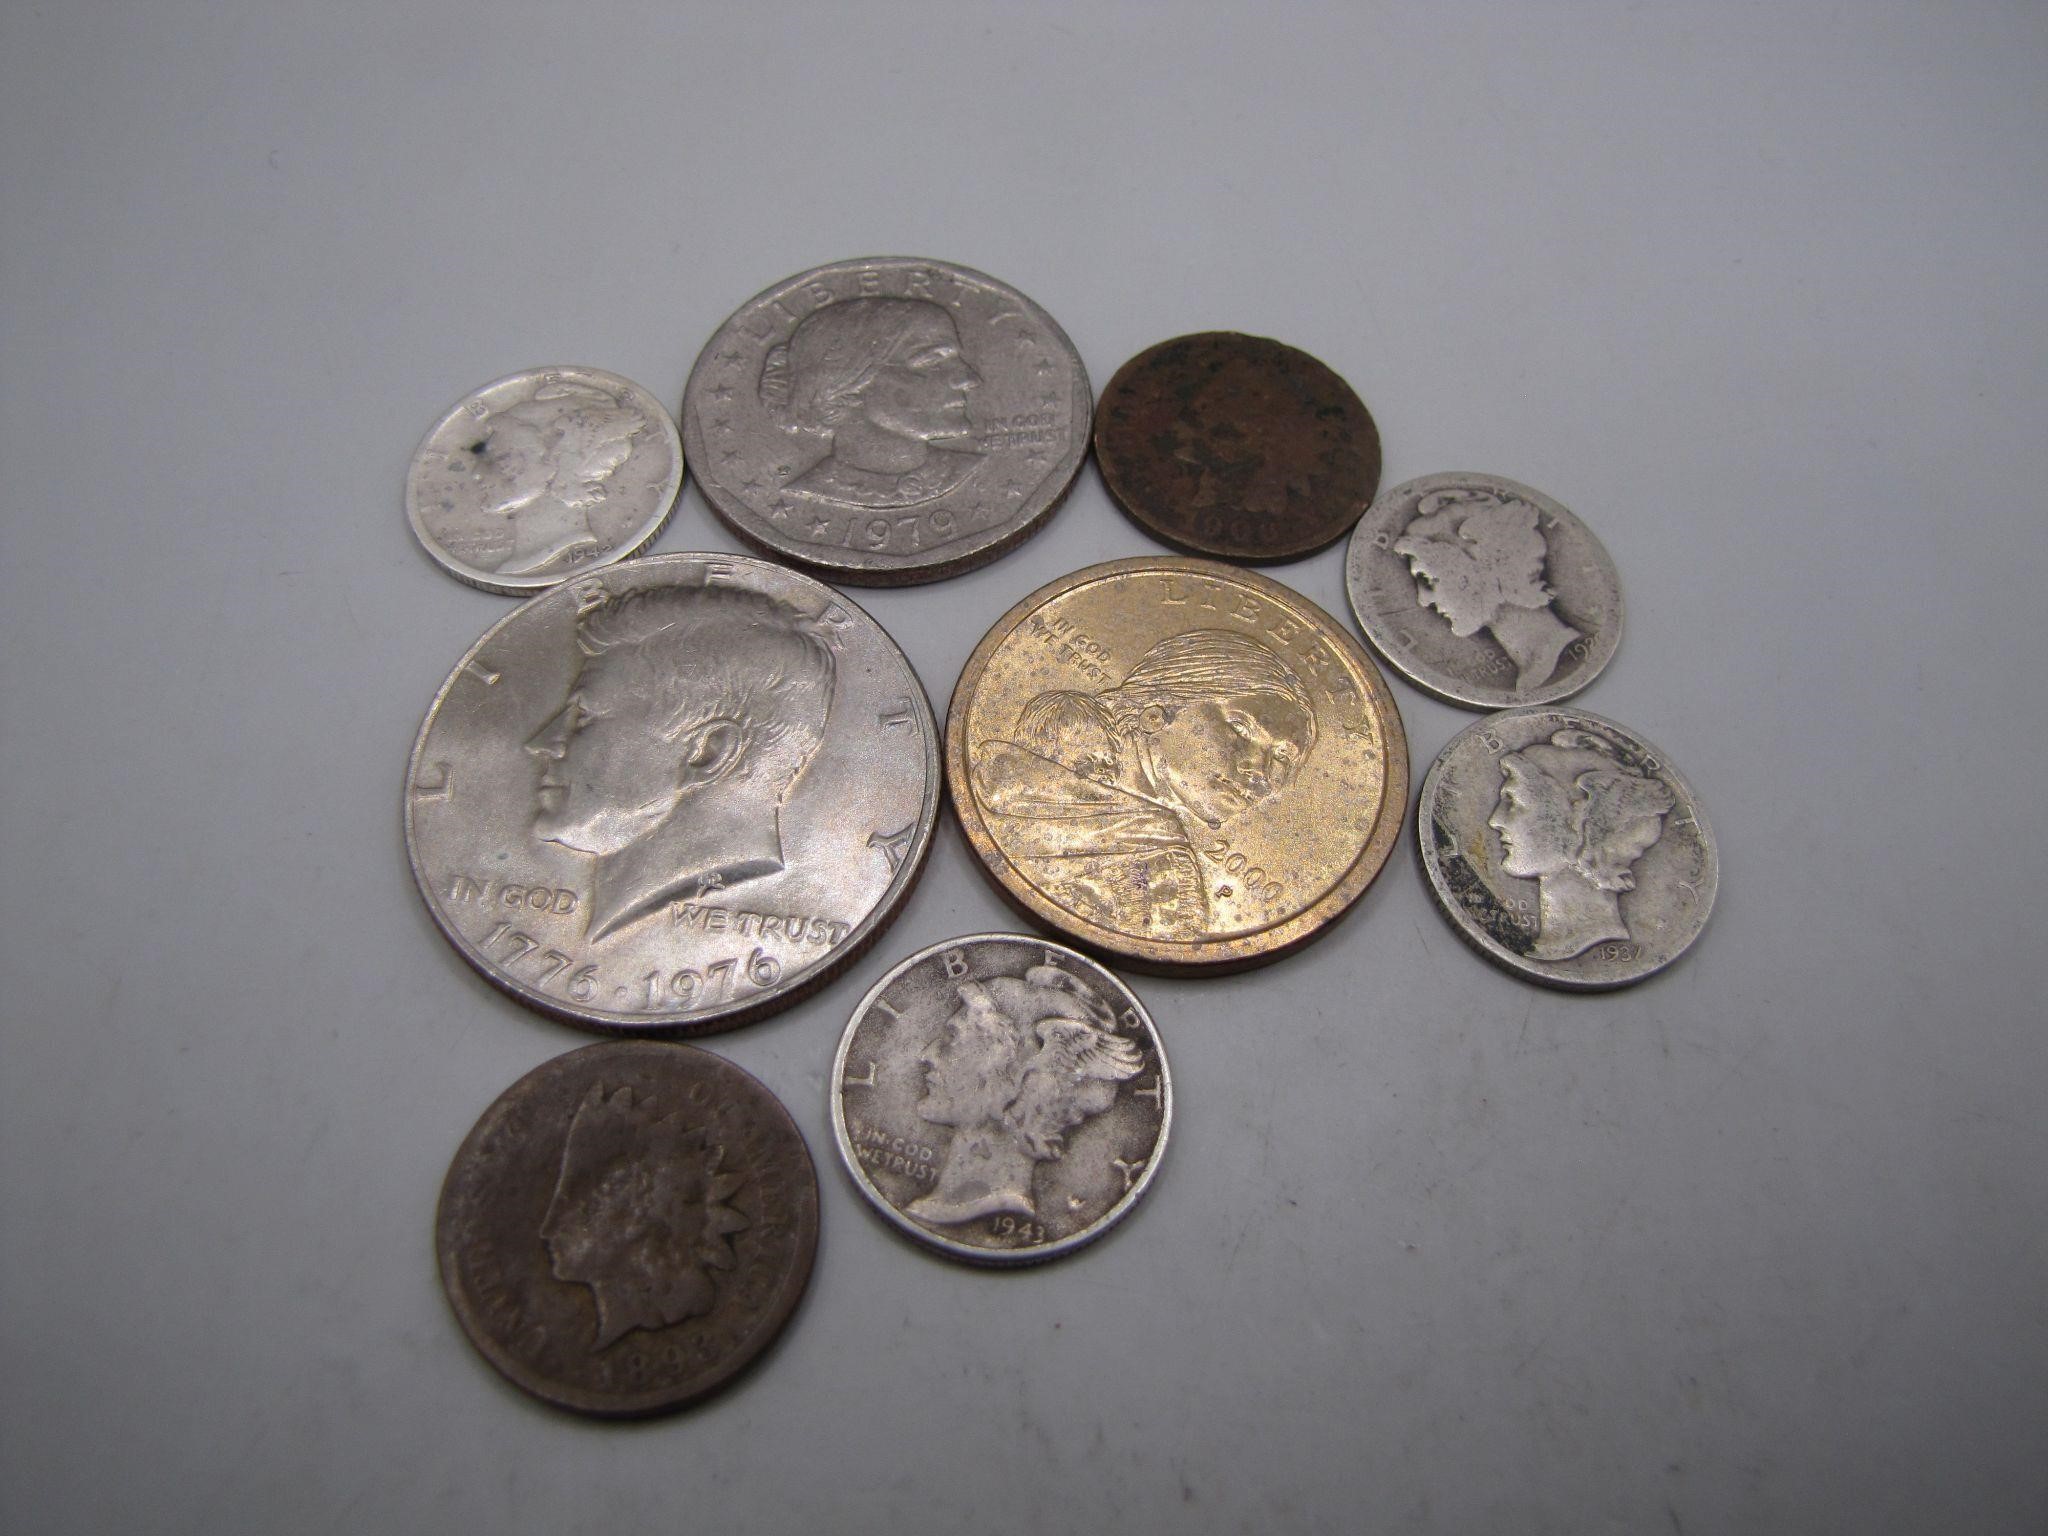 Grab Bag Lot of Vintage U.S. Coins! - Some Silver!